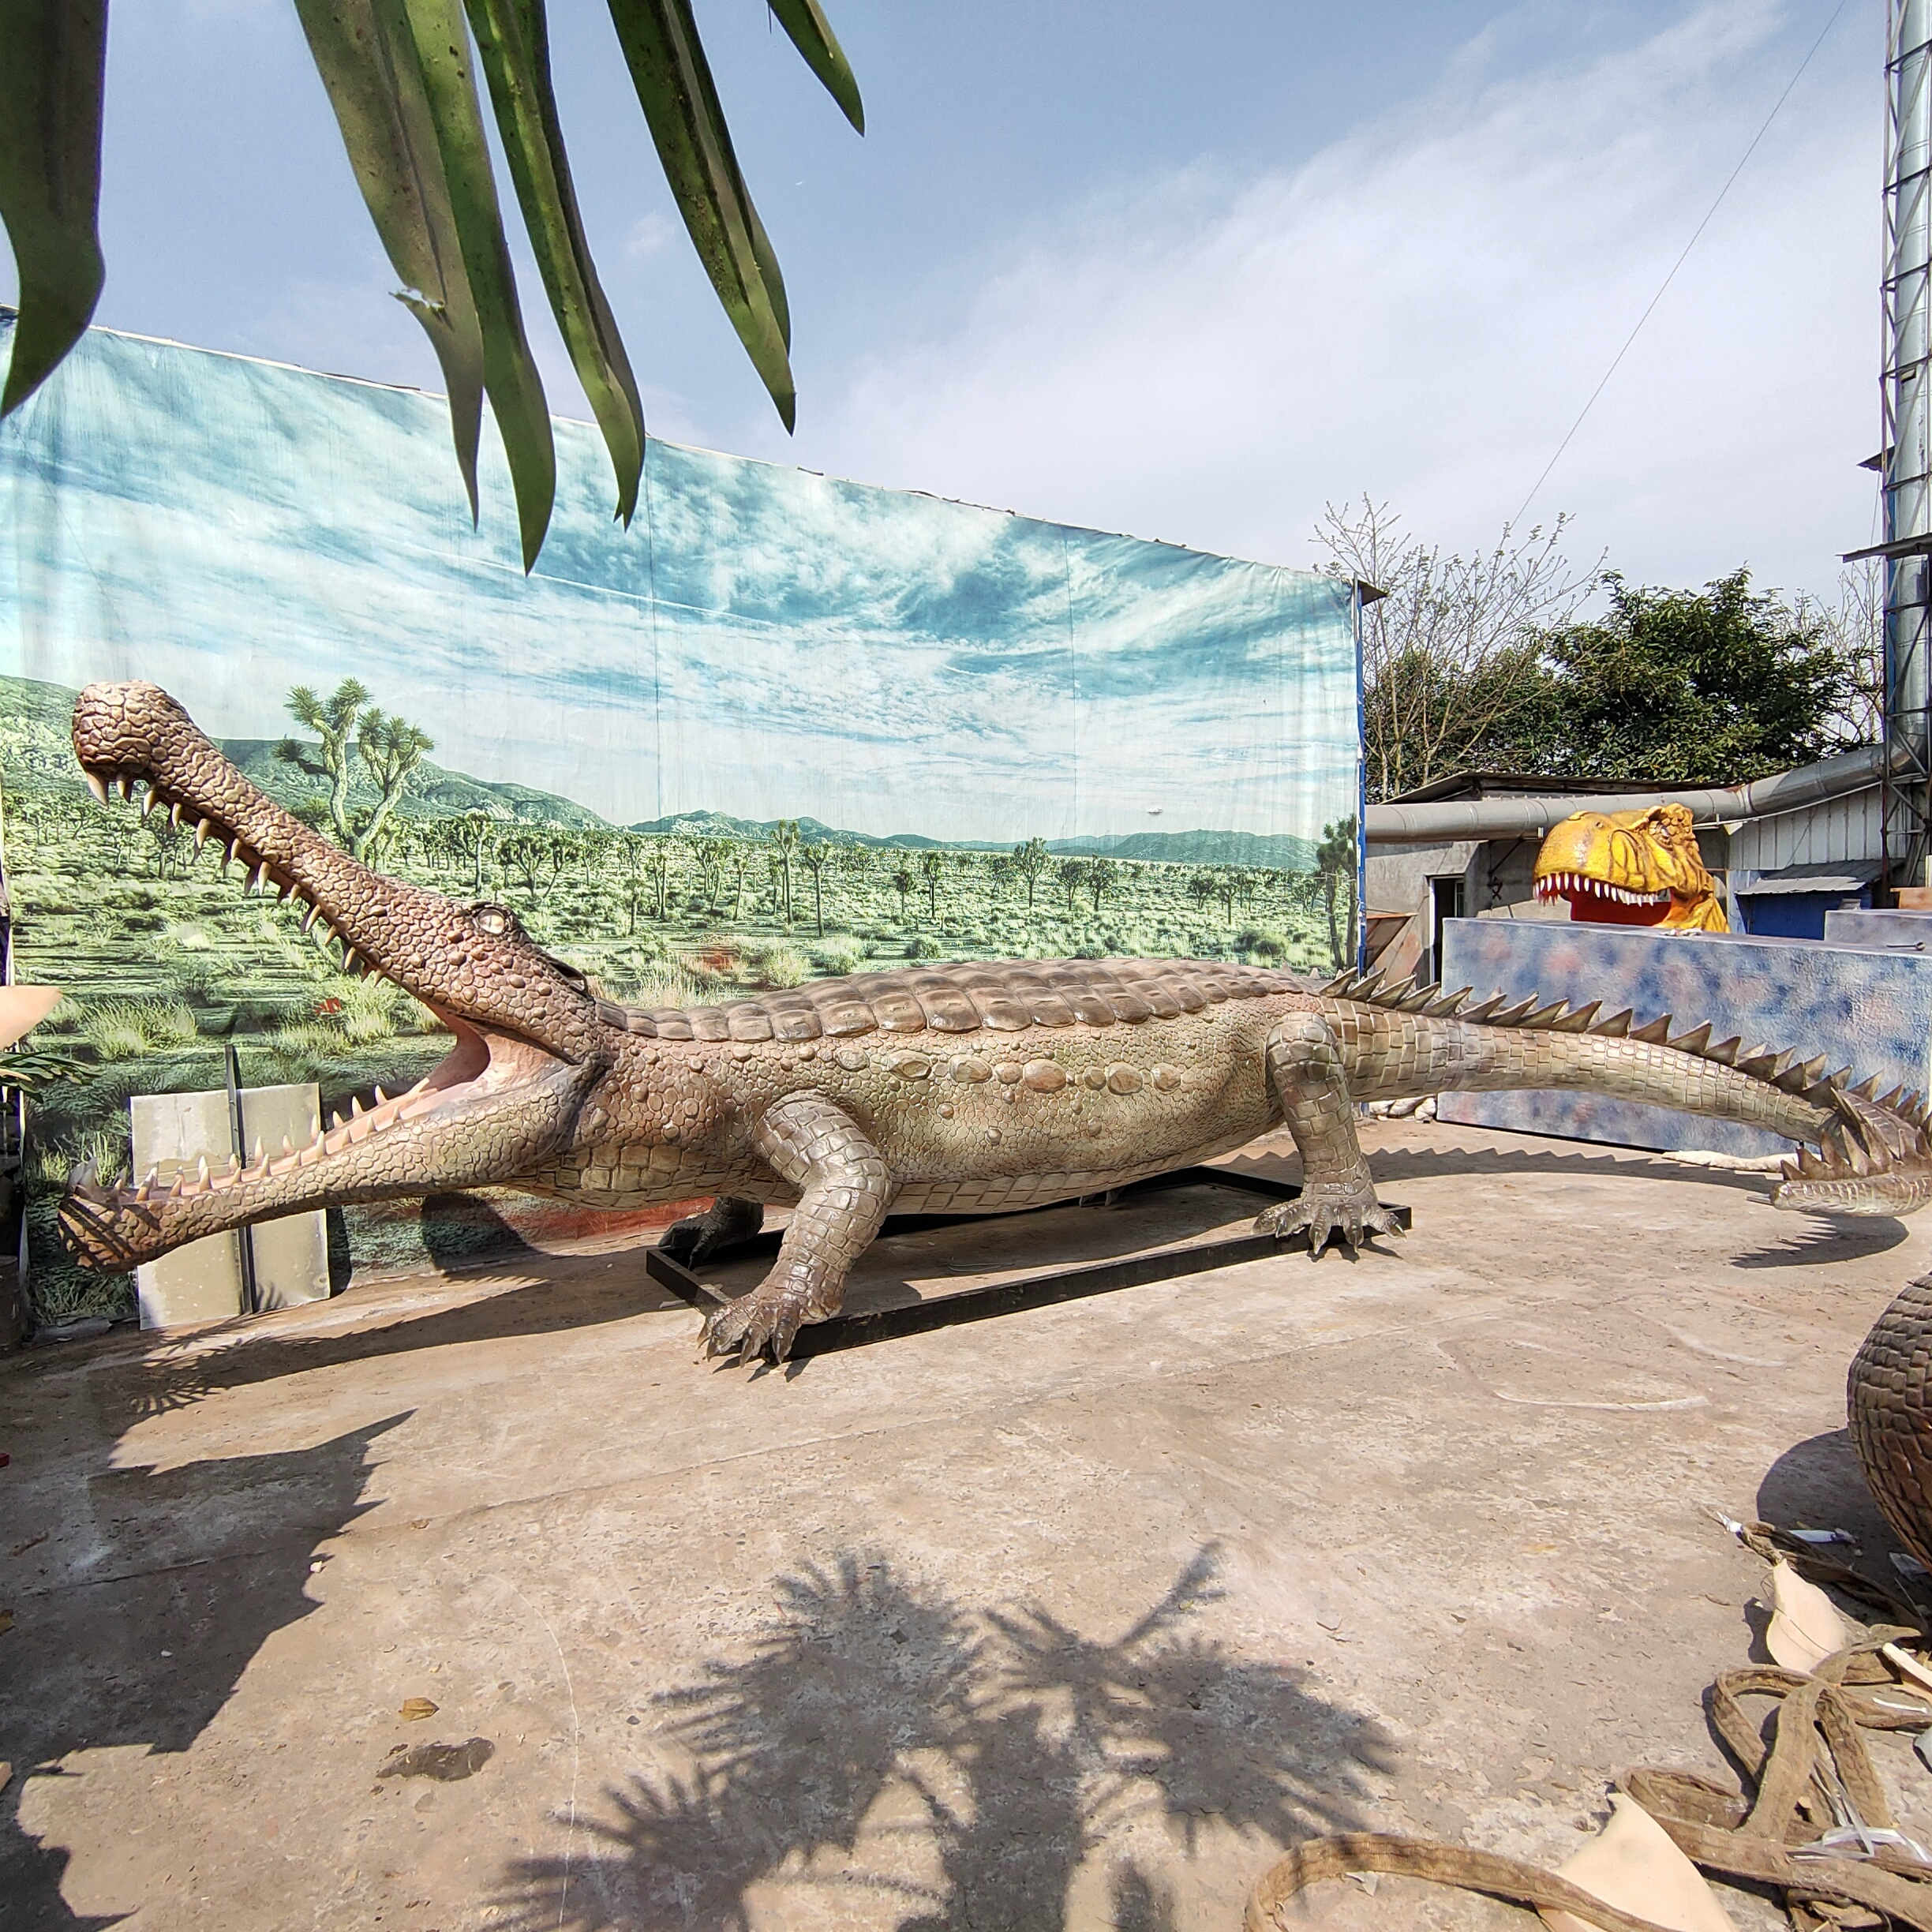 Life size artificial fiberglass crocodile model for outdoor decoration